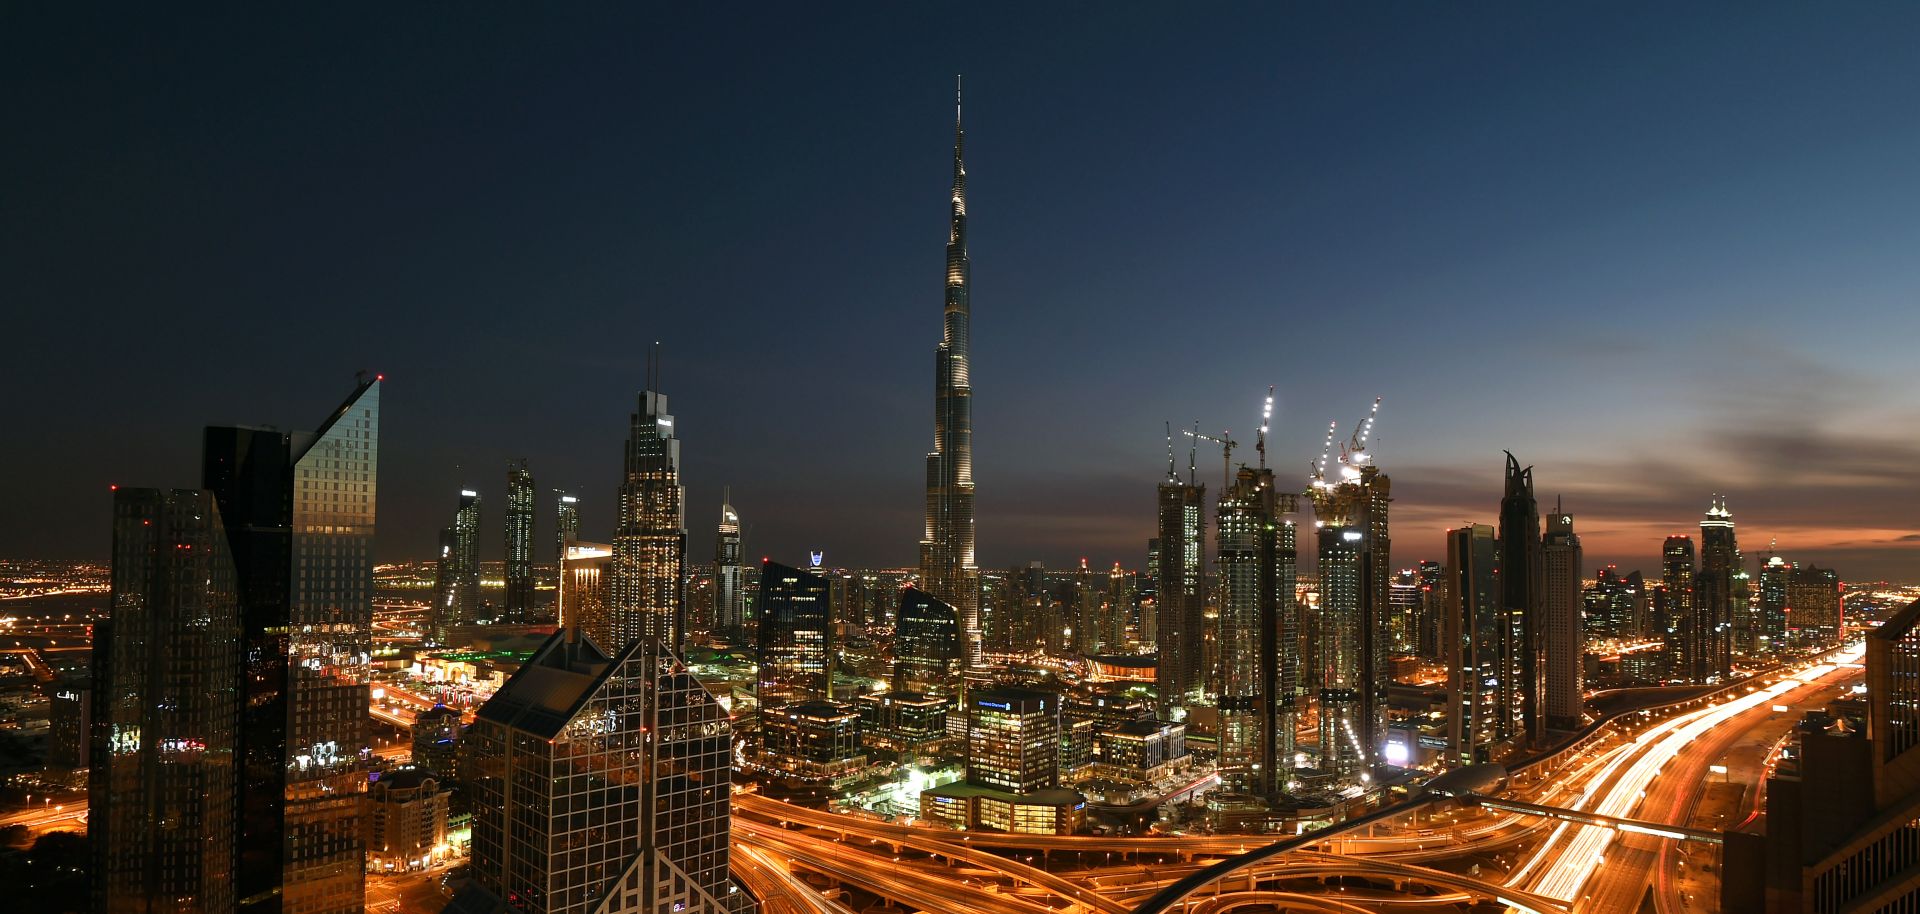 The Burj Khalifa towers above the Dubai skyline on Feb. 6, 2017.